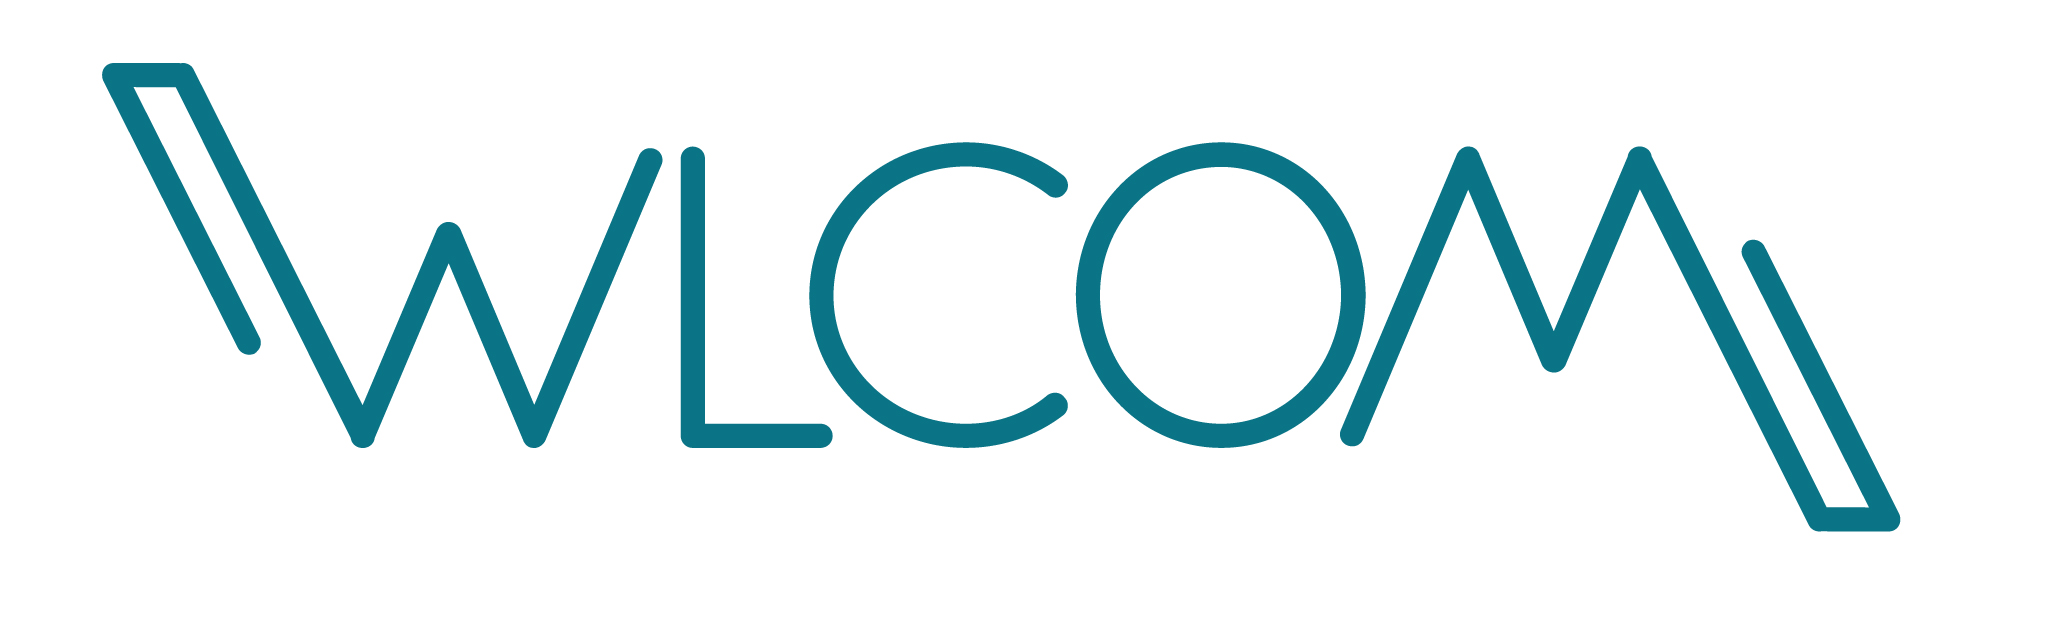 WLCOM AS - Logo